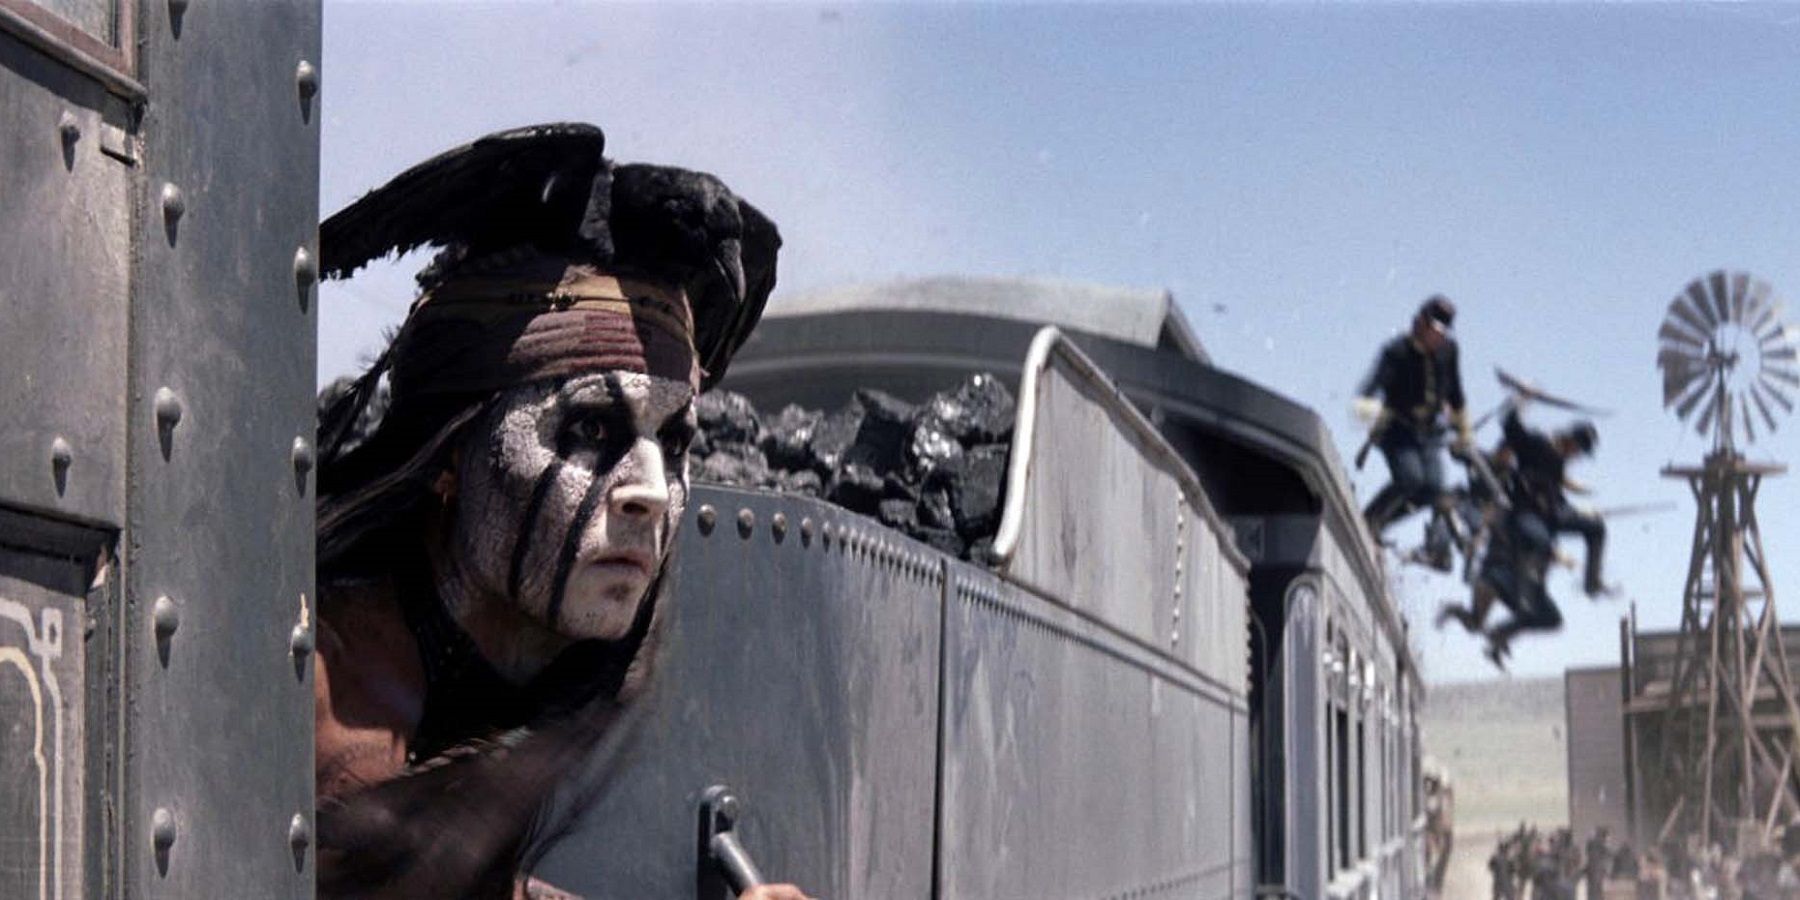 Johnny Depp in the train scene from Lone Ranger